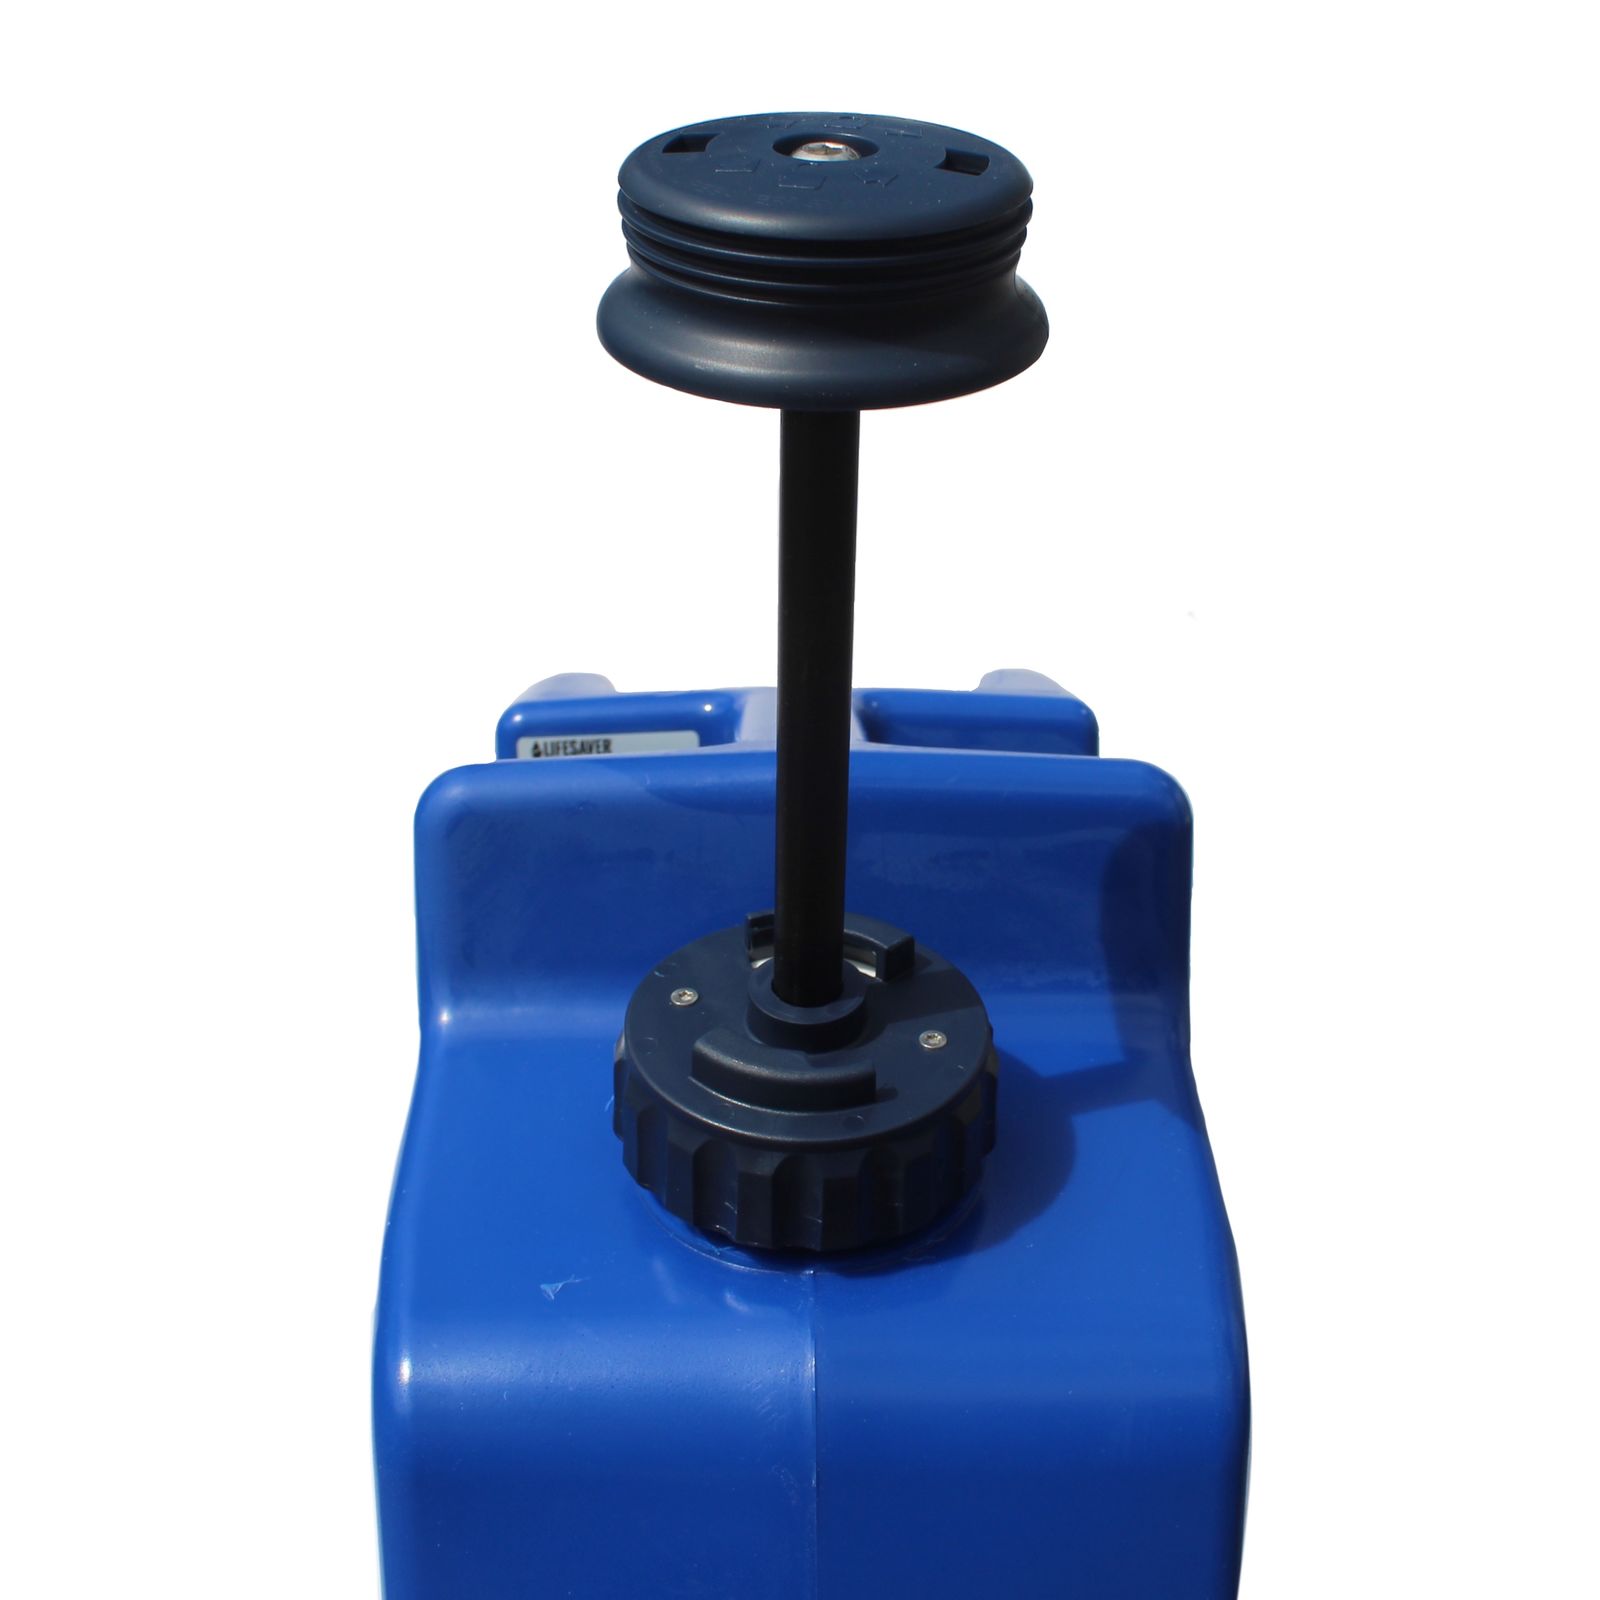 Lifesaver Jerrycan water purifier filtration